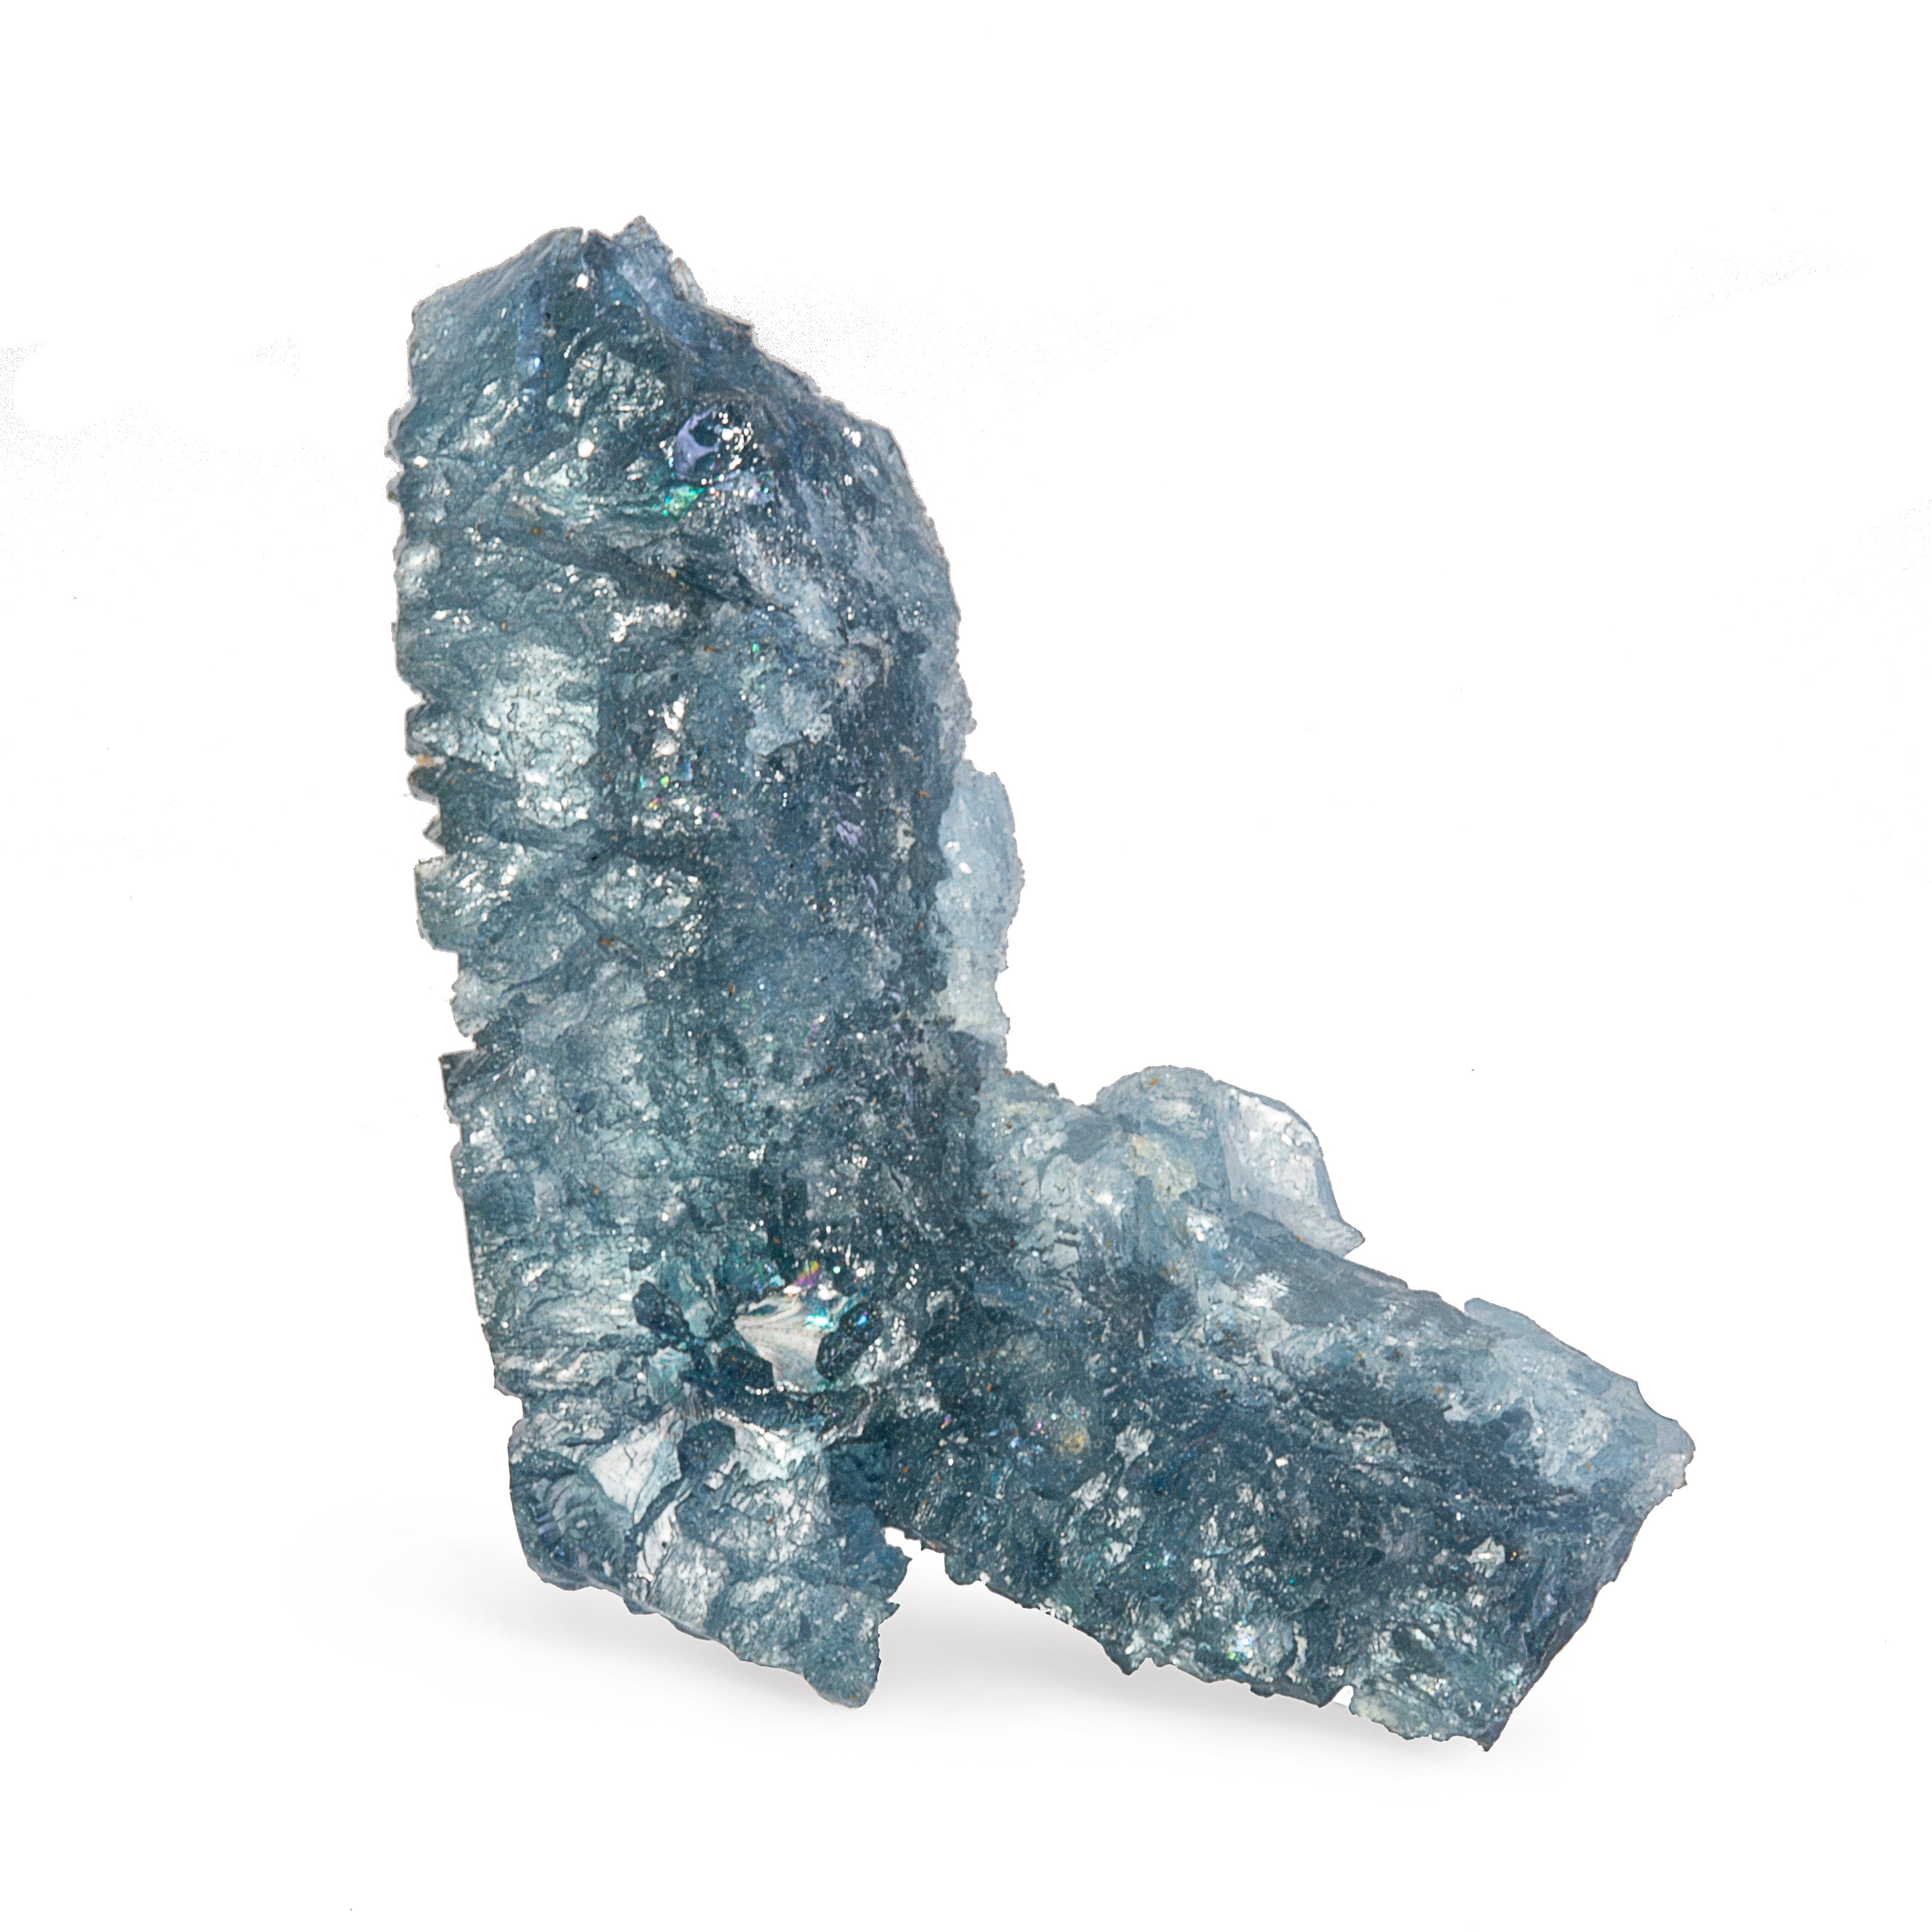 Blue Beryl- Rare Cesium Rich 34 carat Blue Beryl Etched Natural Crystal - Afghanistan - JJX-168 - Crystalarium